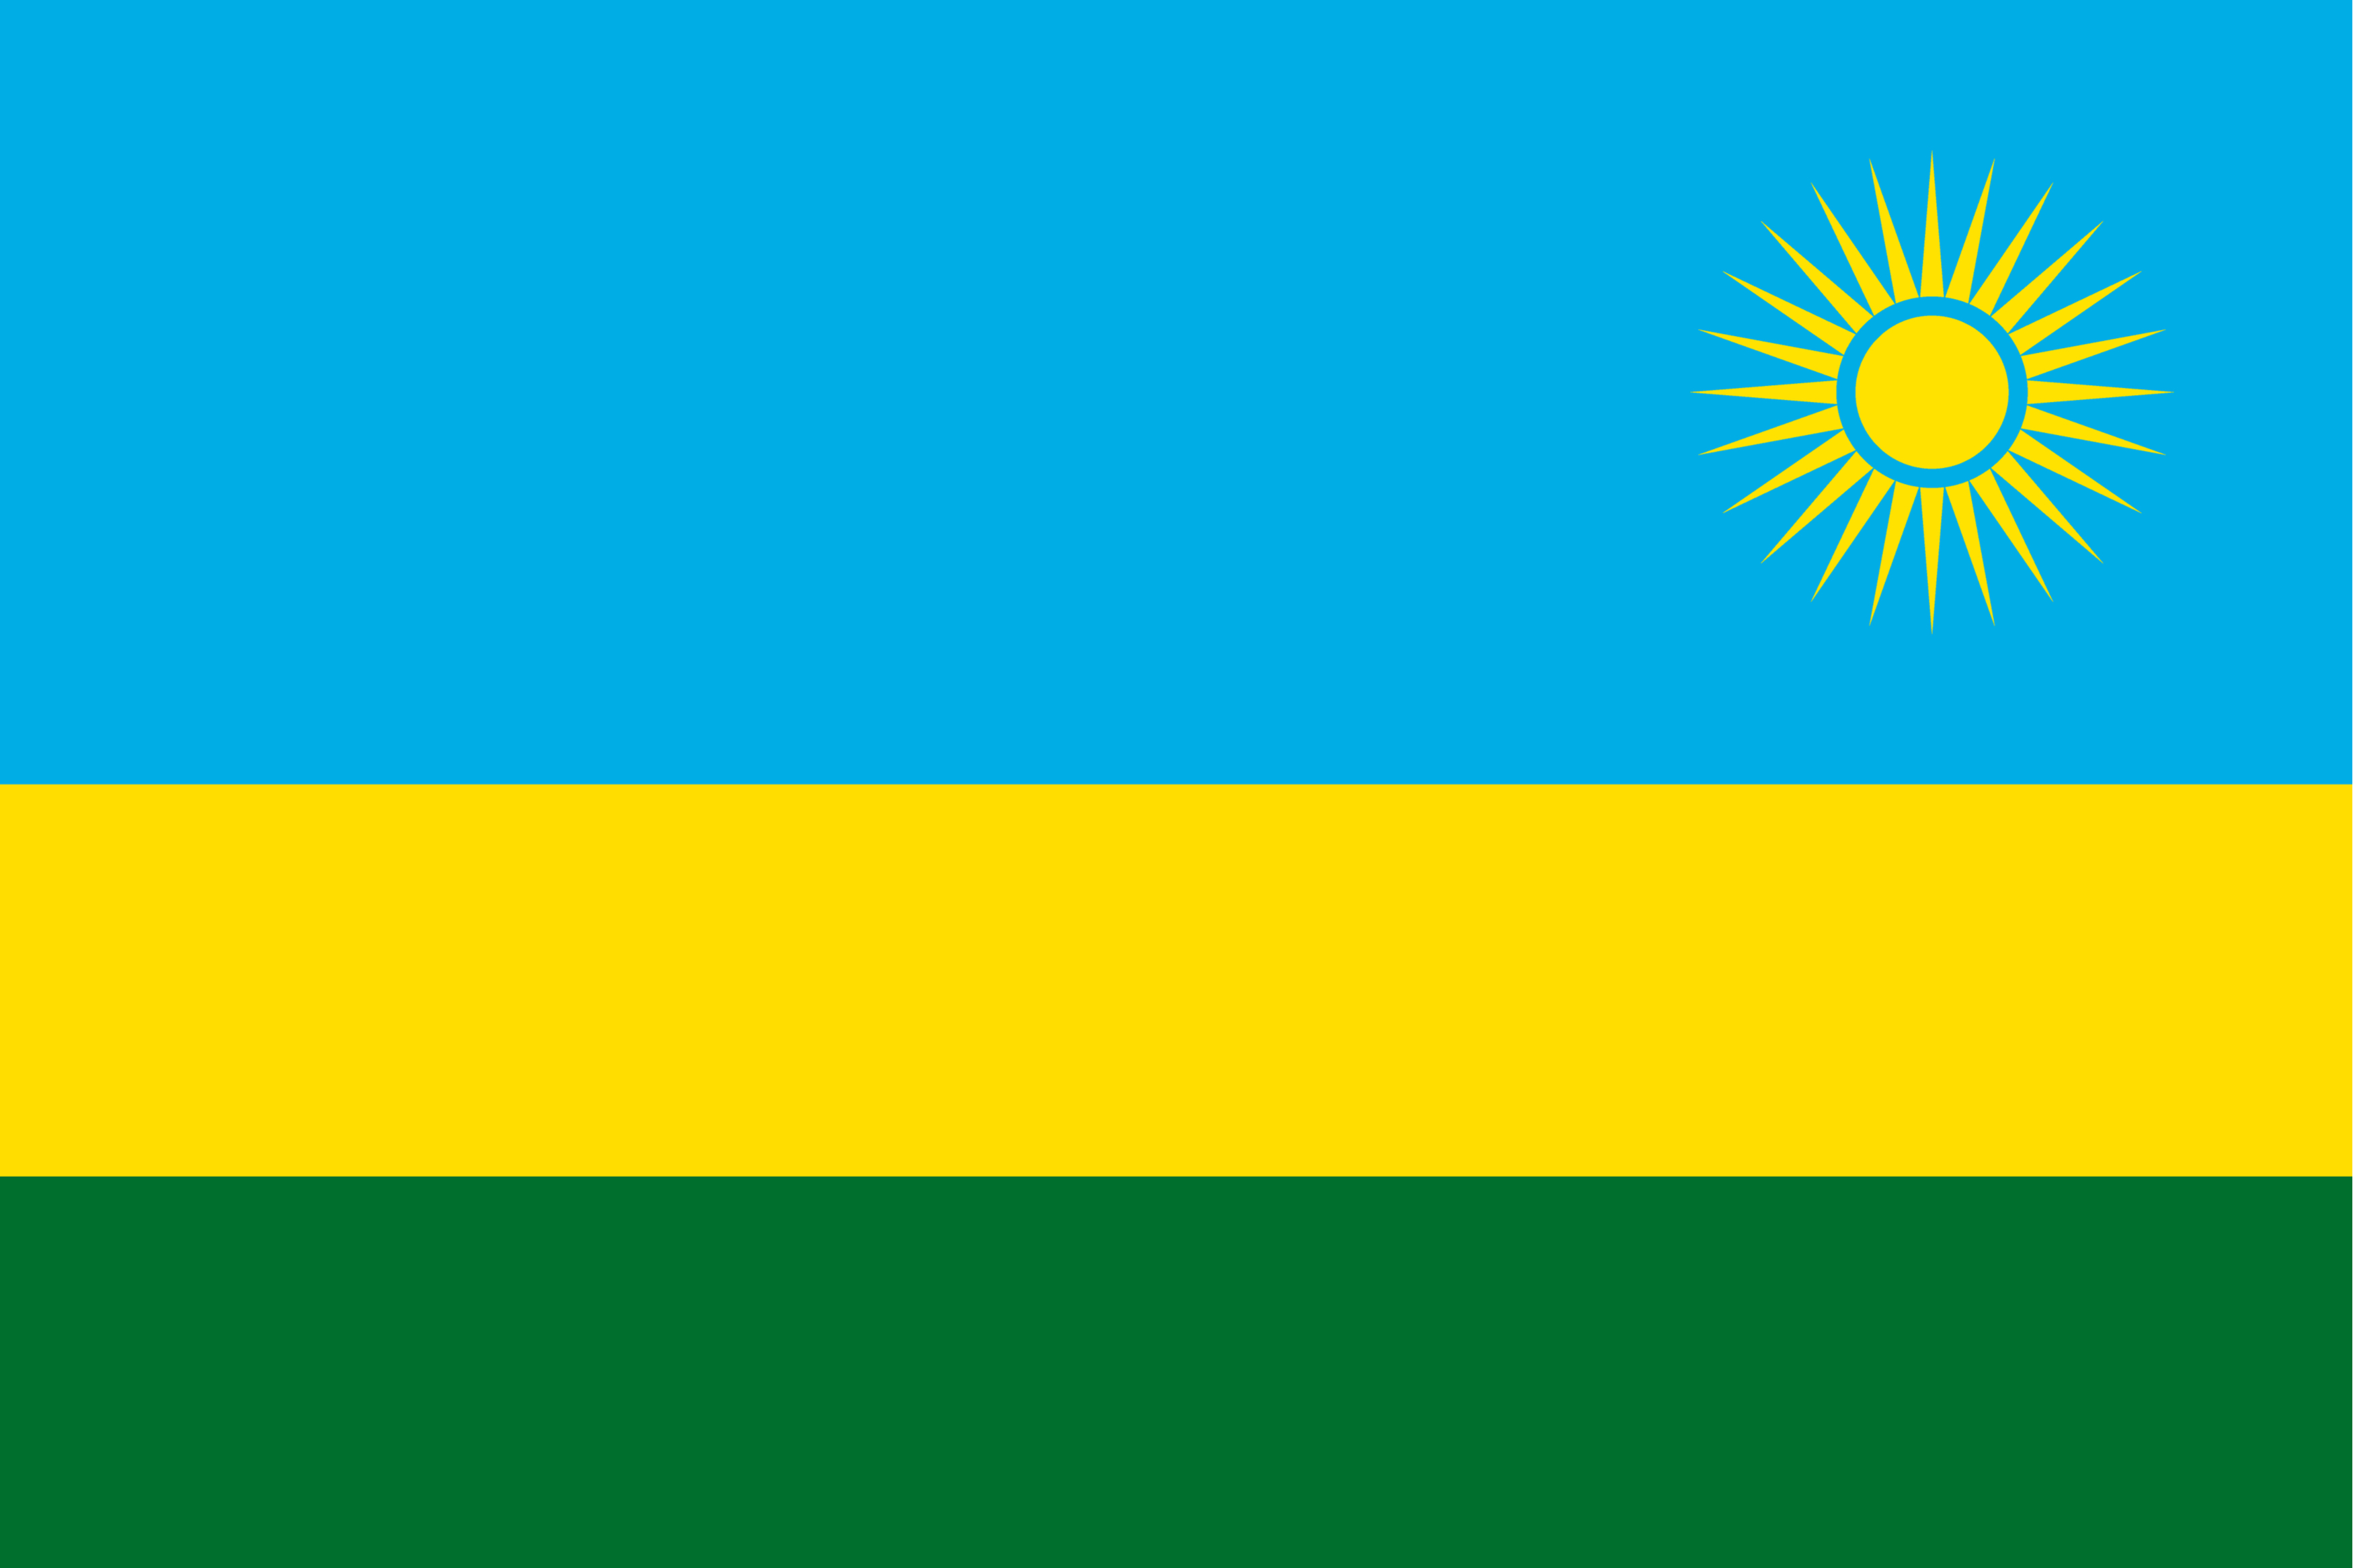 Flag of Rwanda, Colors, Symbols, Meaning